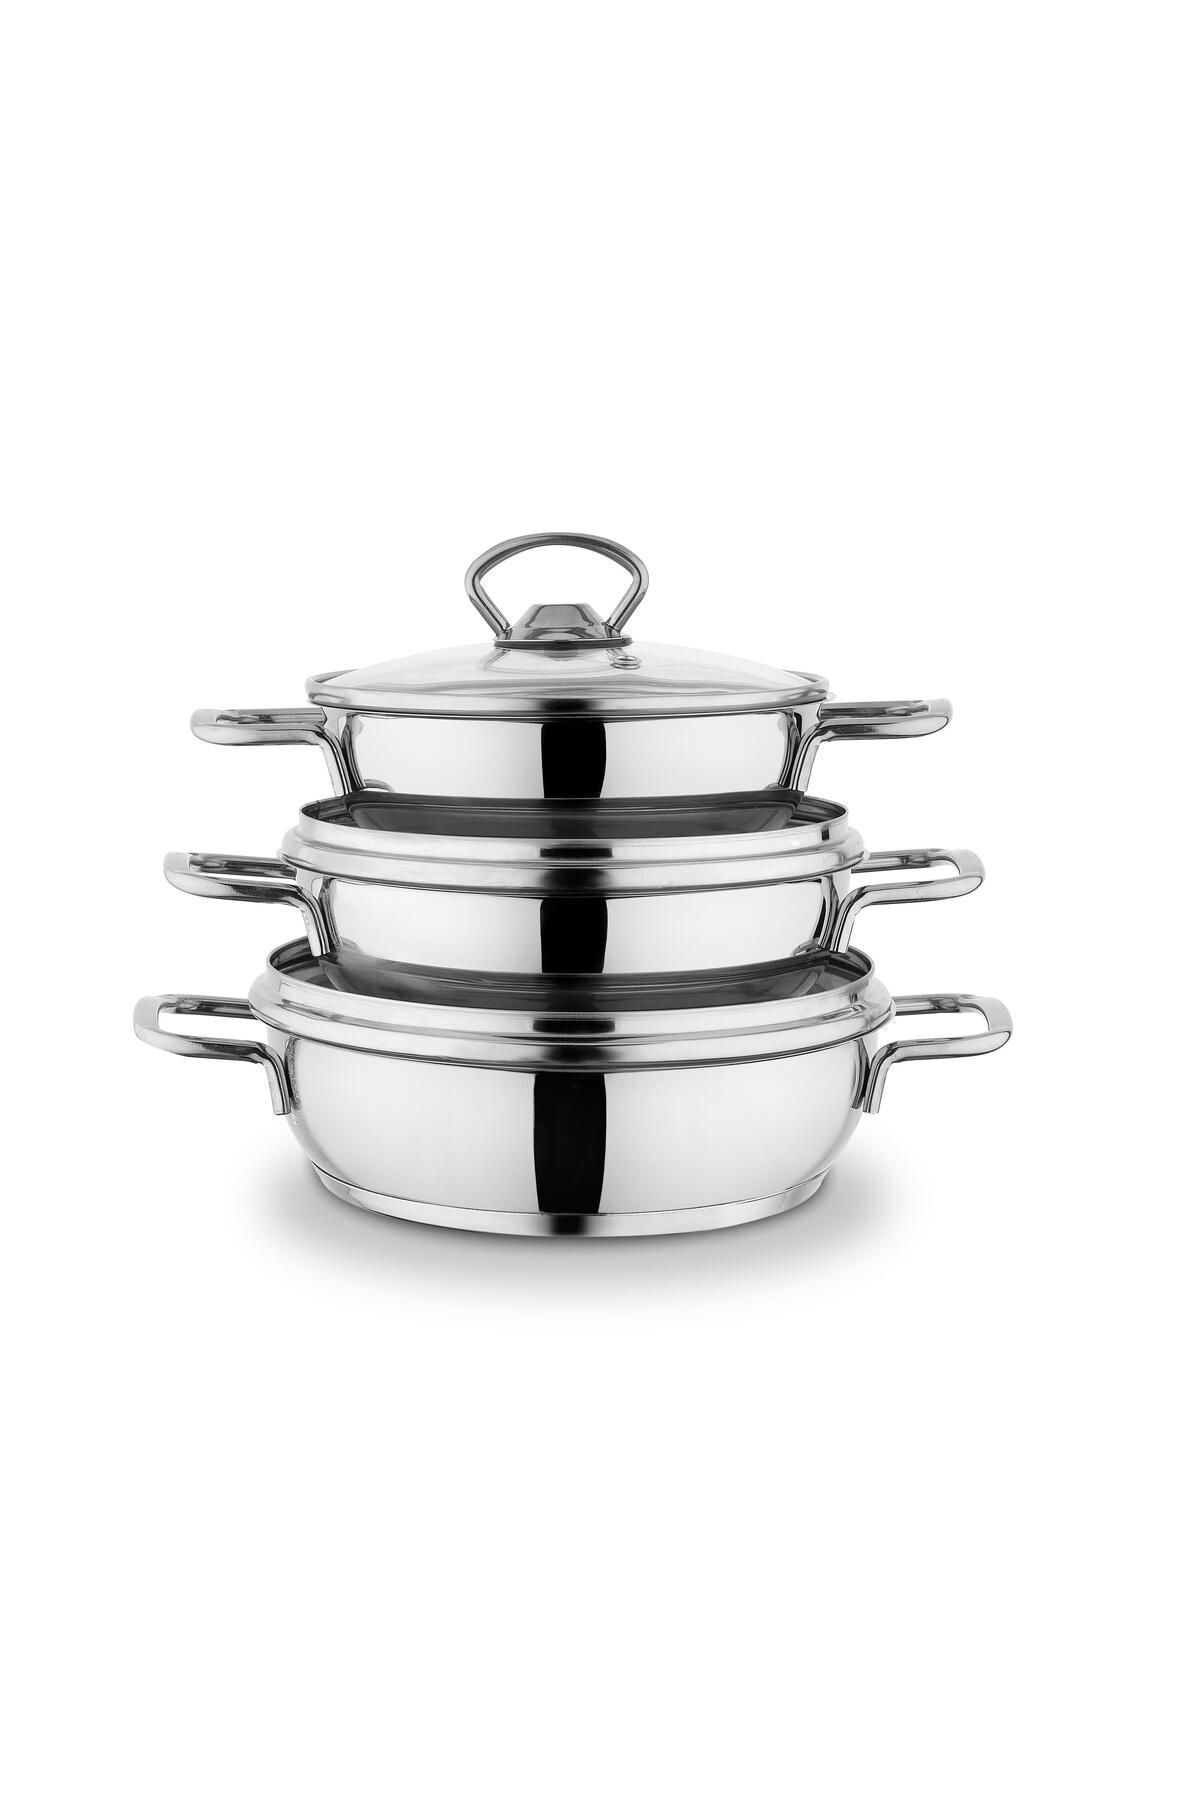 Schafer Cookhaus Çelik Sahan Seti-6 Parça-gümüş